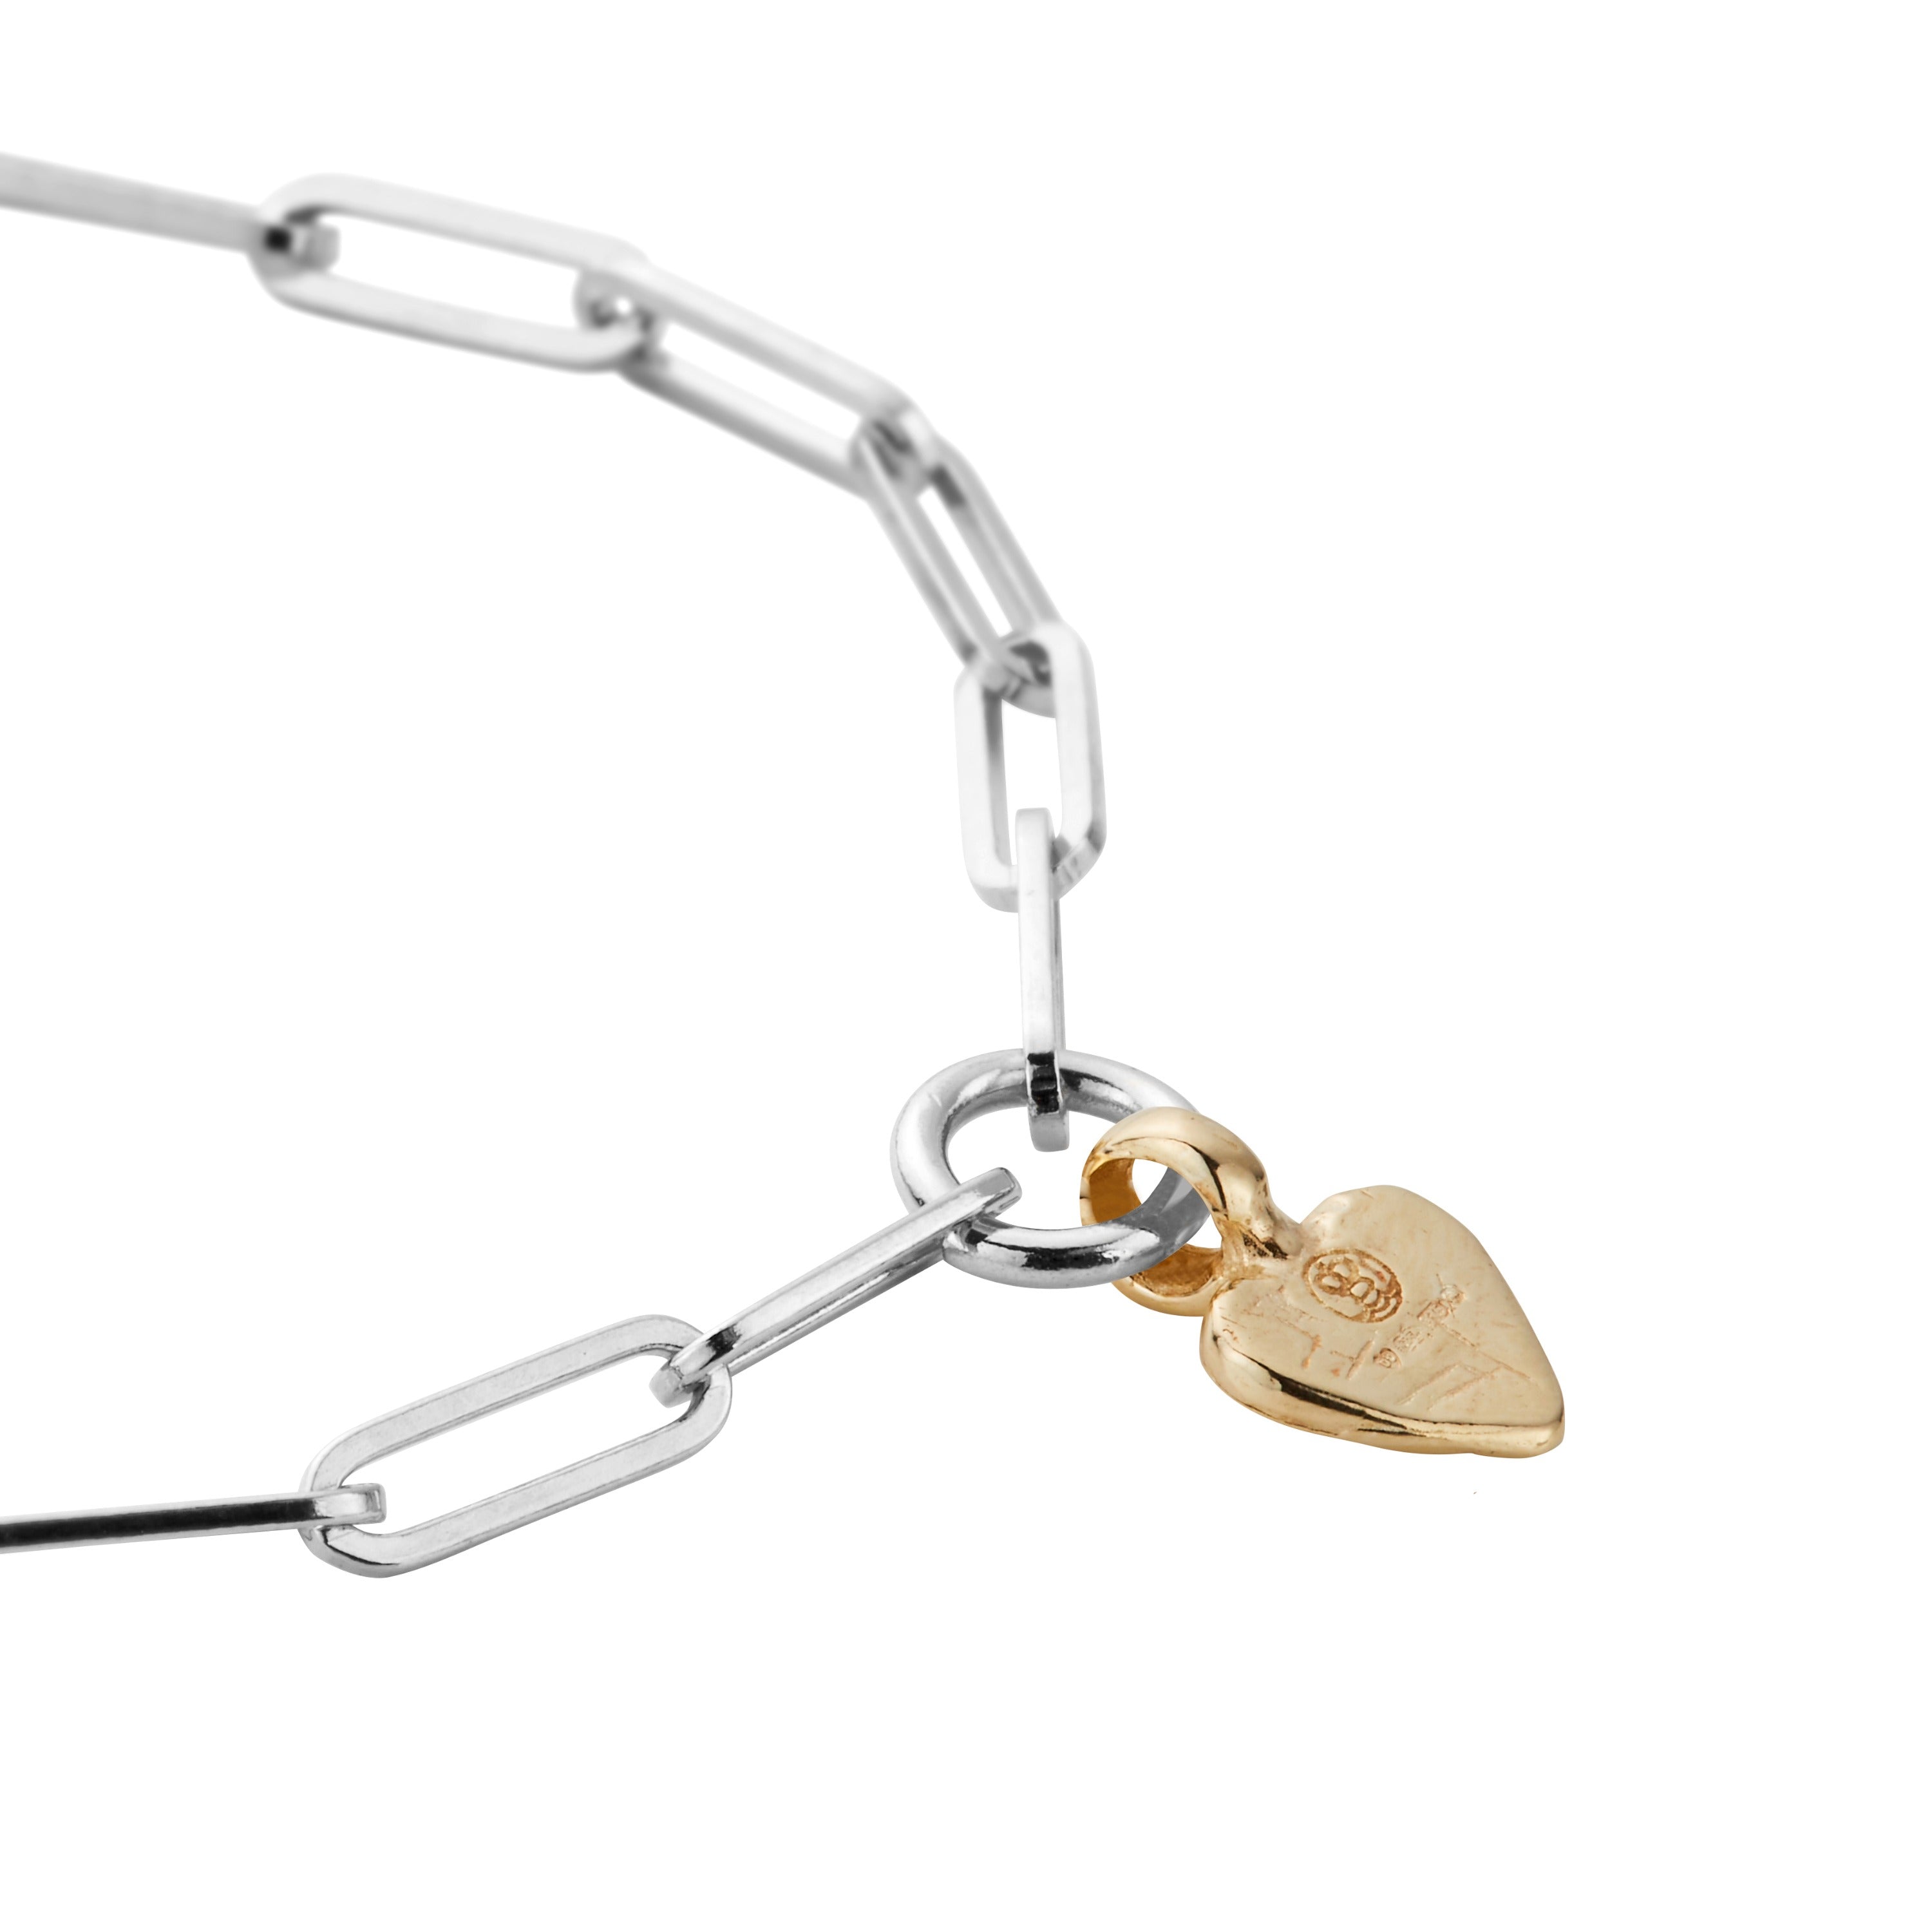 Silver & Gold Baby Heart Trace Chain Bracelet